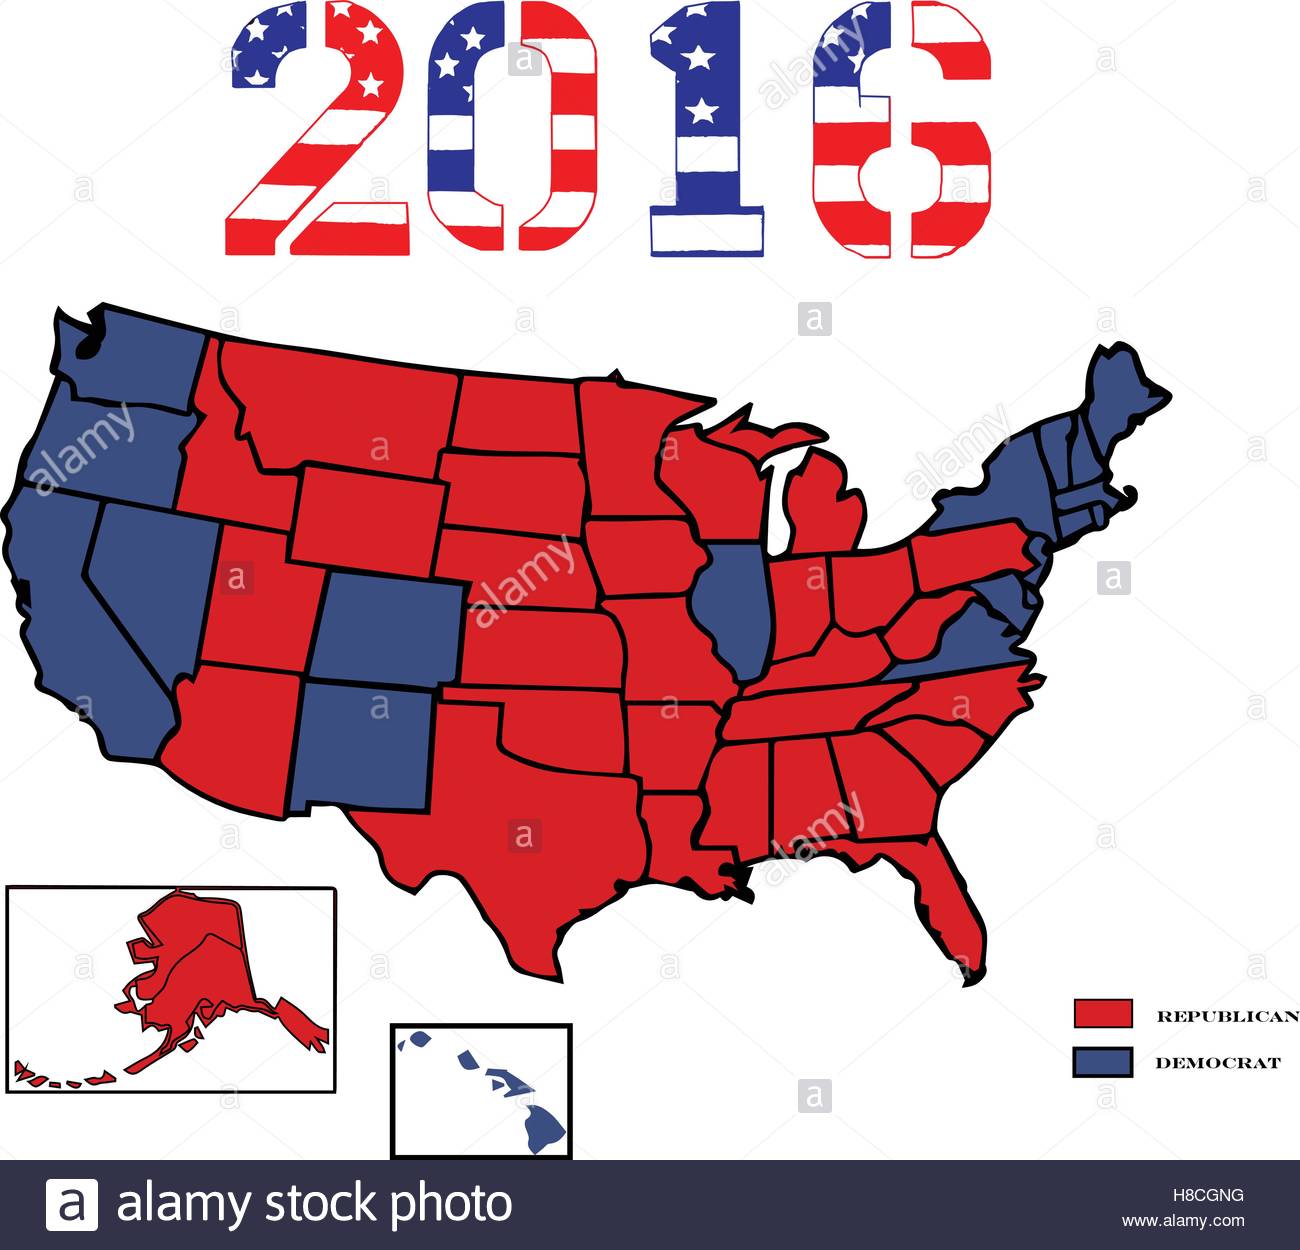 50 United States colored in Republican Red, Democrat Blue ...